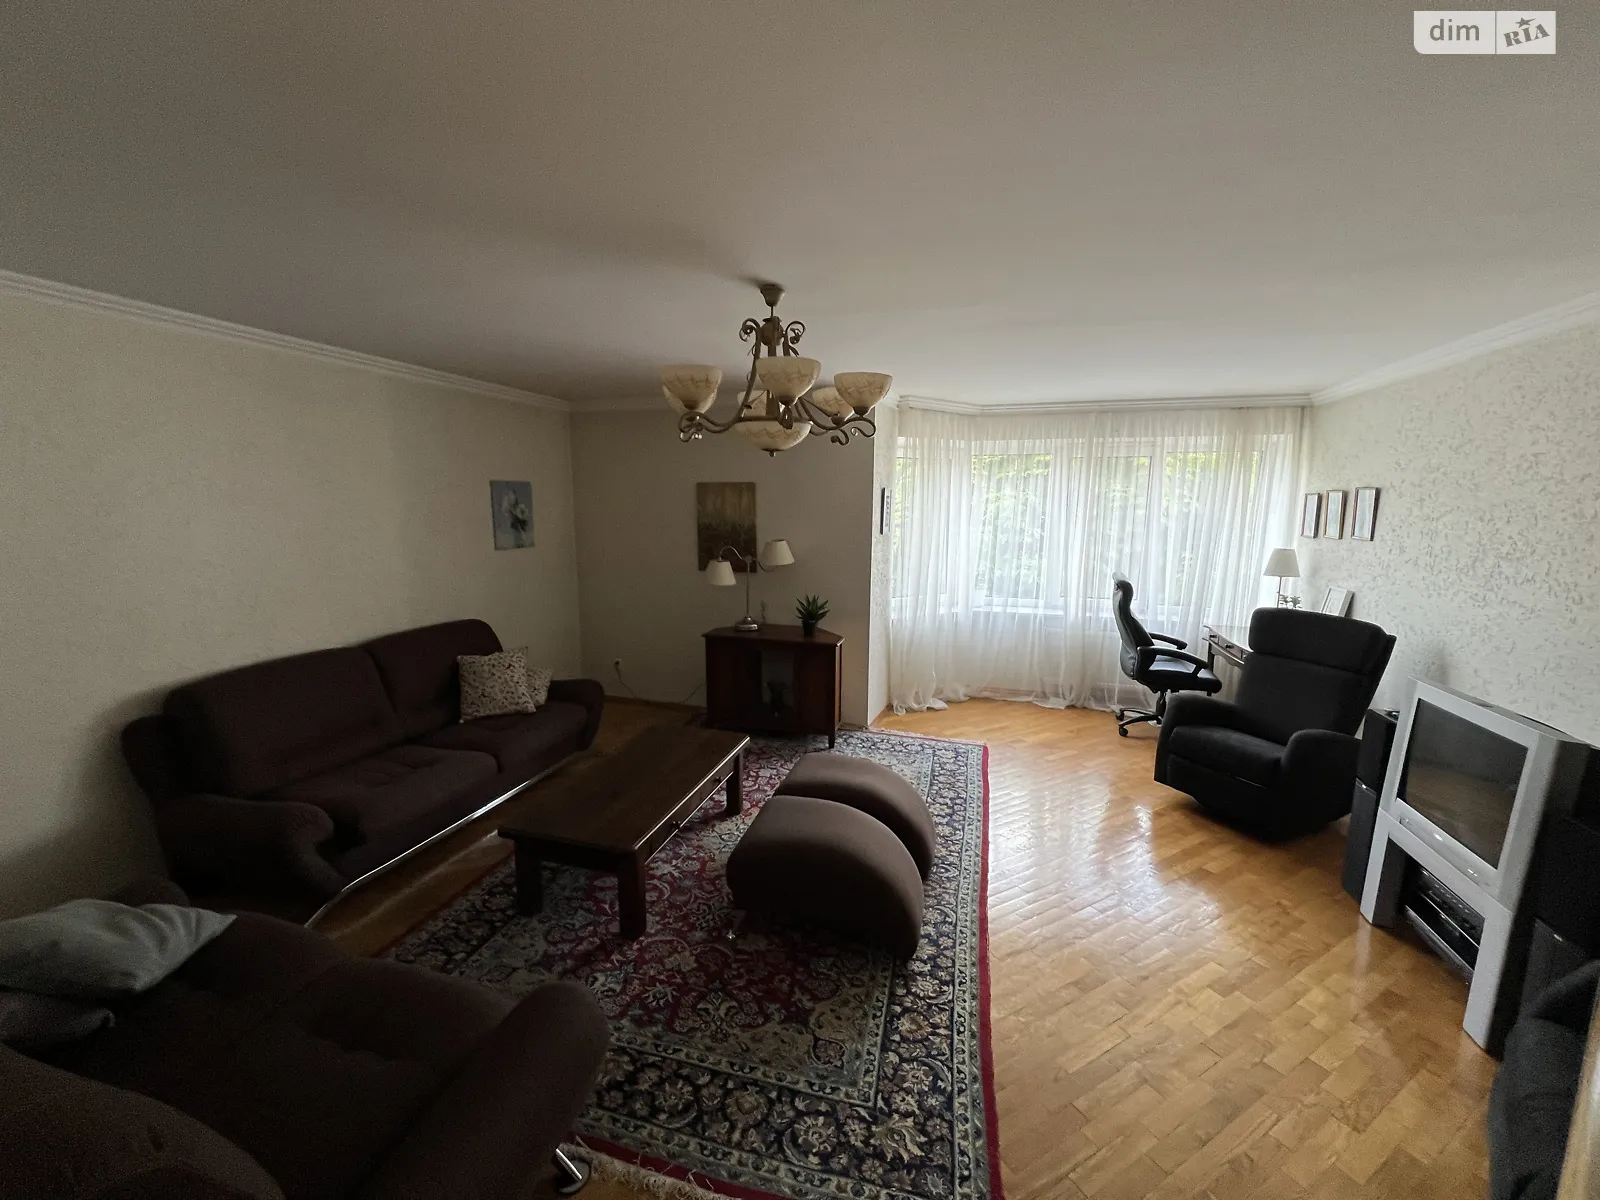 3-кімнатна квартира 110 кв. м у Луцьку, цена: 800 $